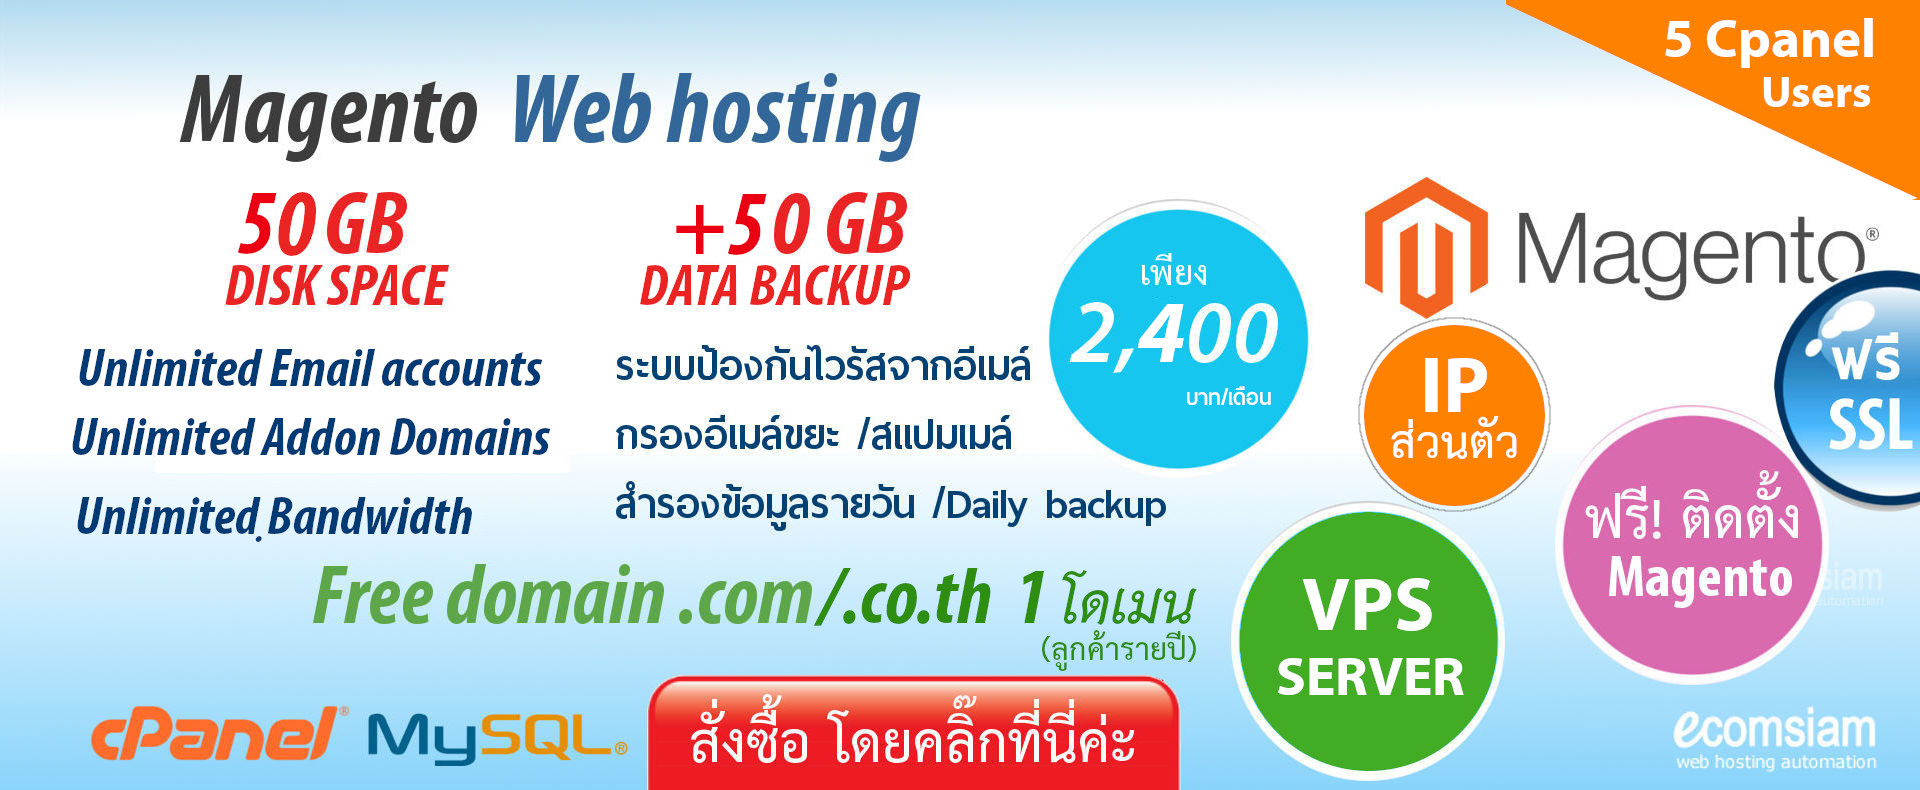 web hosting thai แนะนำ magento web hosting - vps server เพียง 2,400 บ./เดือน  พิเศษสุดๆ ลูกค้ารายปีชำระเพียง 11 เดือน และ ฟรี จดโดเมน หรือต่ออายุโดเมนตลอดการใช้งาน เว็บโฮสติ้งไทย ฟรี โดเมน ฟรี SSL ฟรีติดตั้ง แนะนำเว็บโฮสติ้ง บริการลูกค้า  Support ดูแลดี โดย ecomsiam.com - magento web hosting thailand free domain